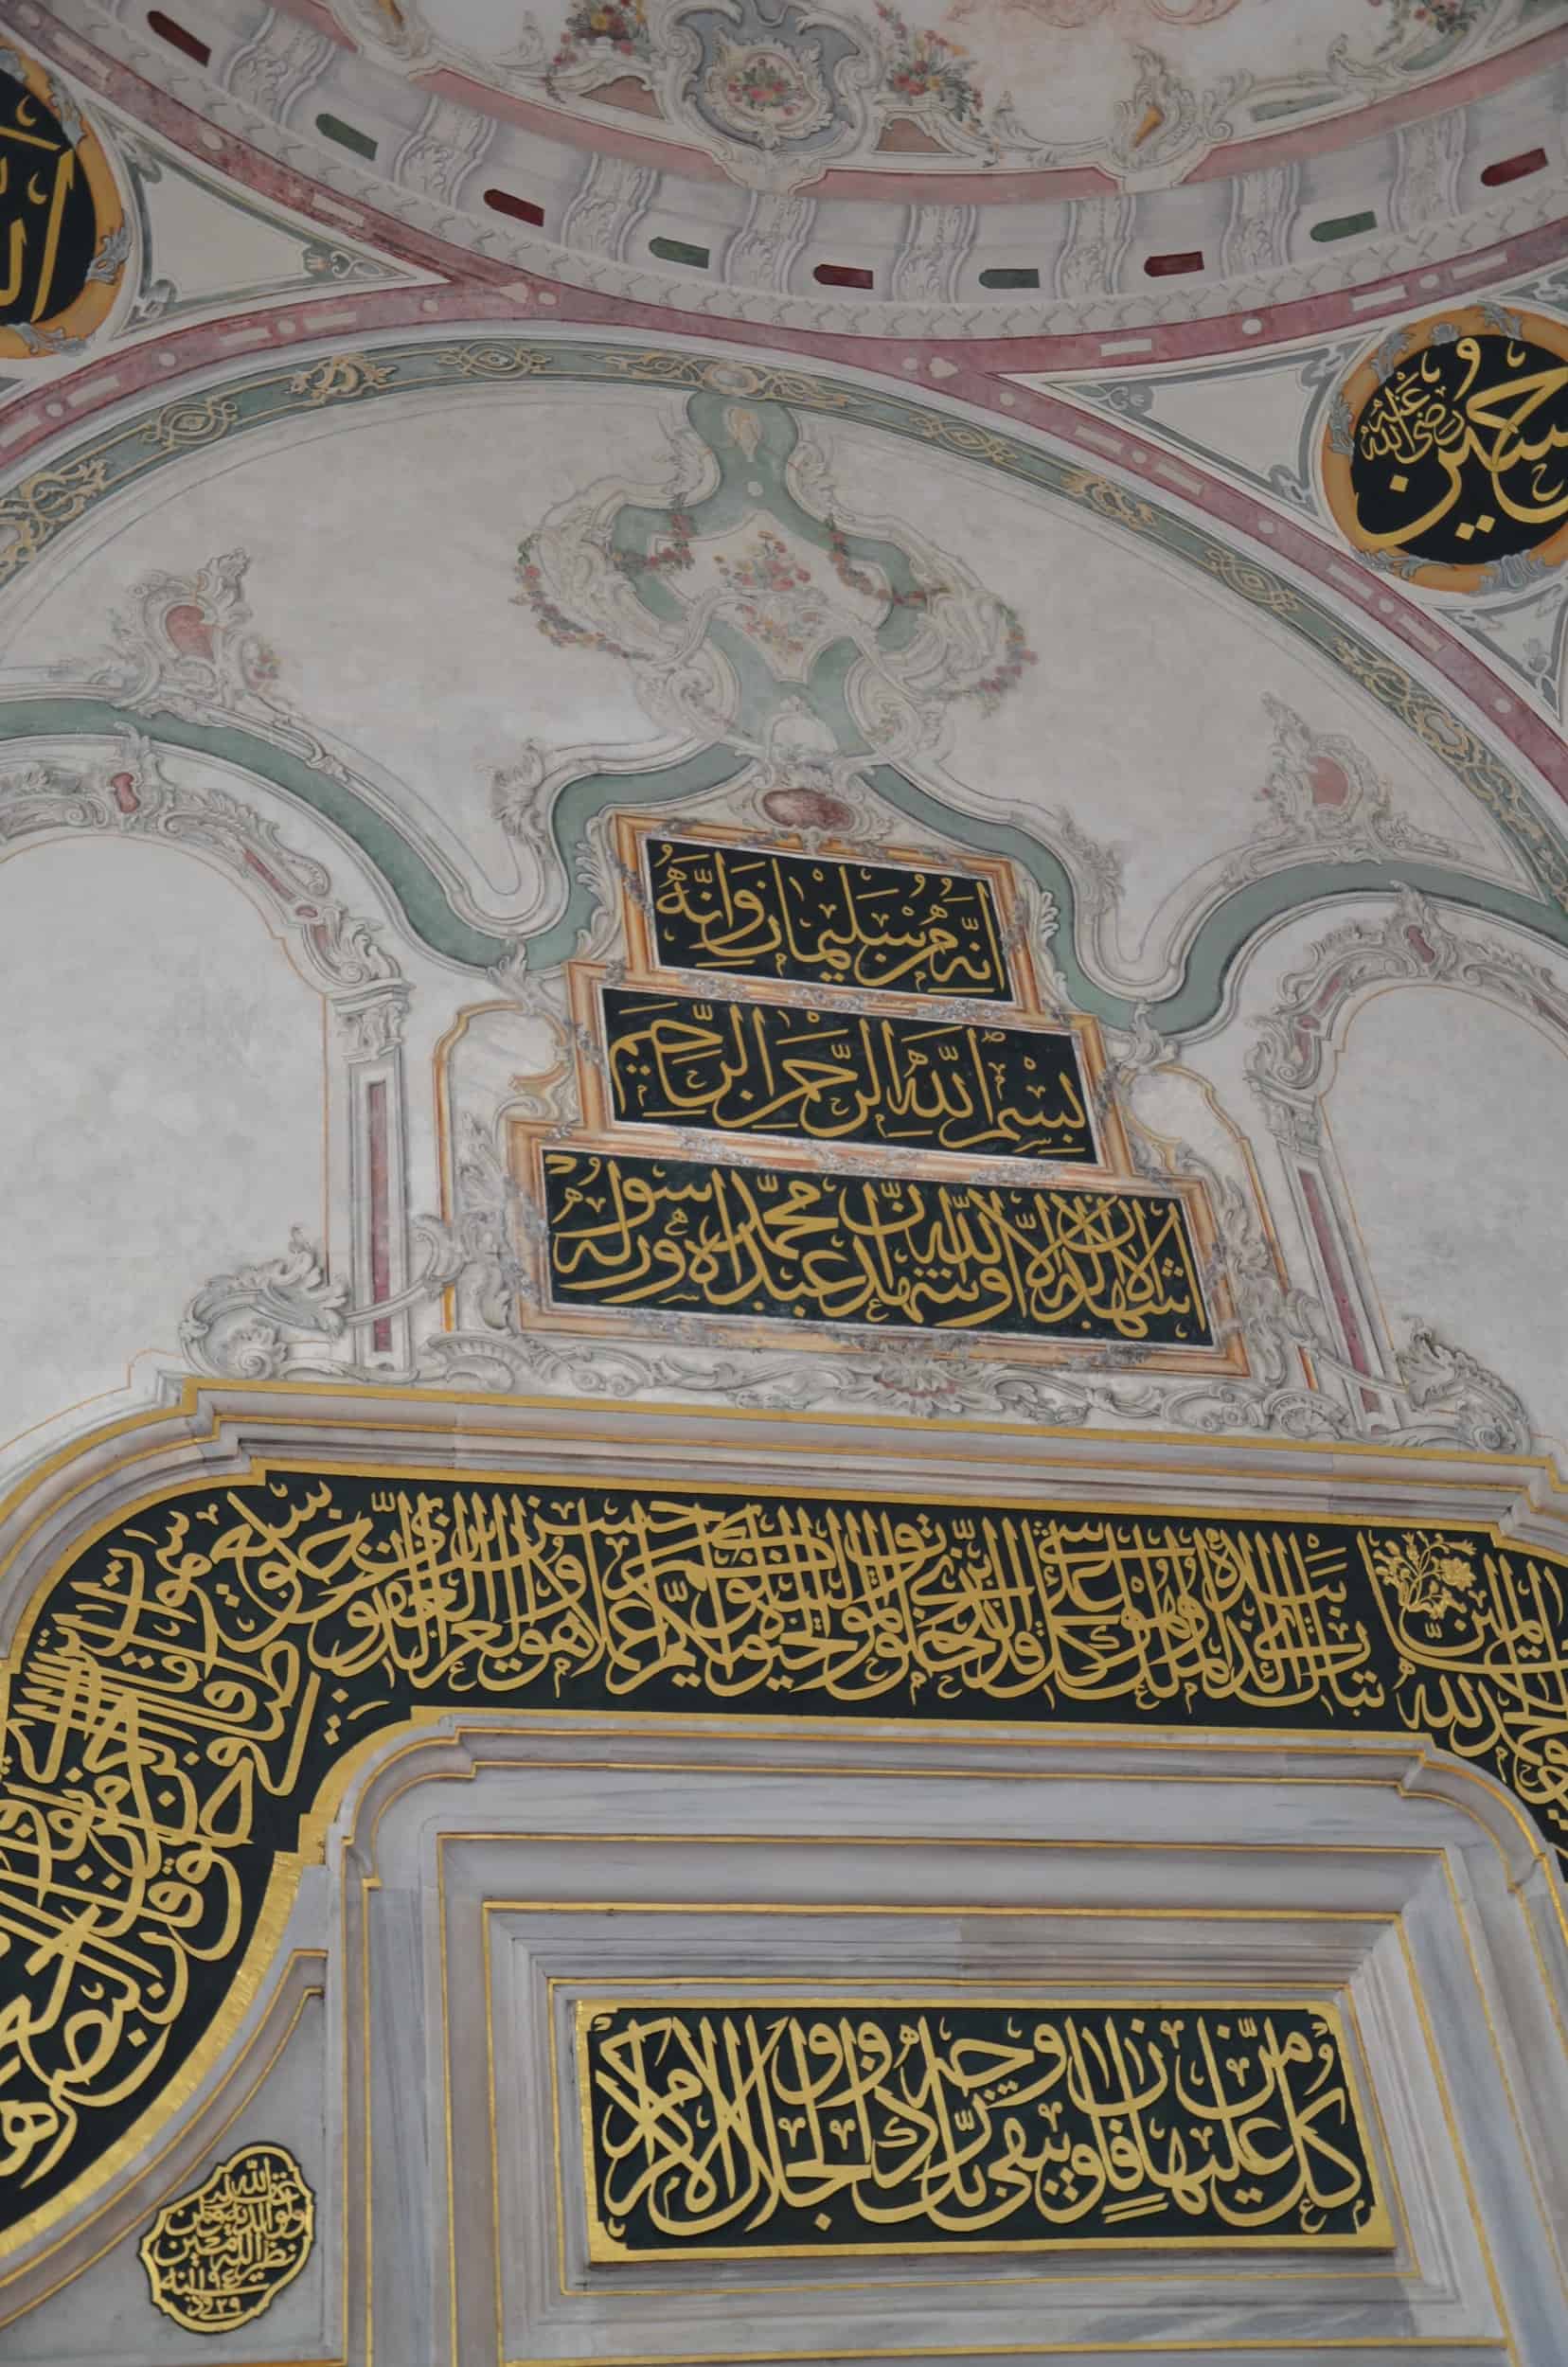 Decoration at the Tomb of Abdülhamid I in Eminönü, Istanbul, Turkey